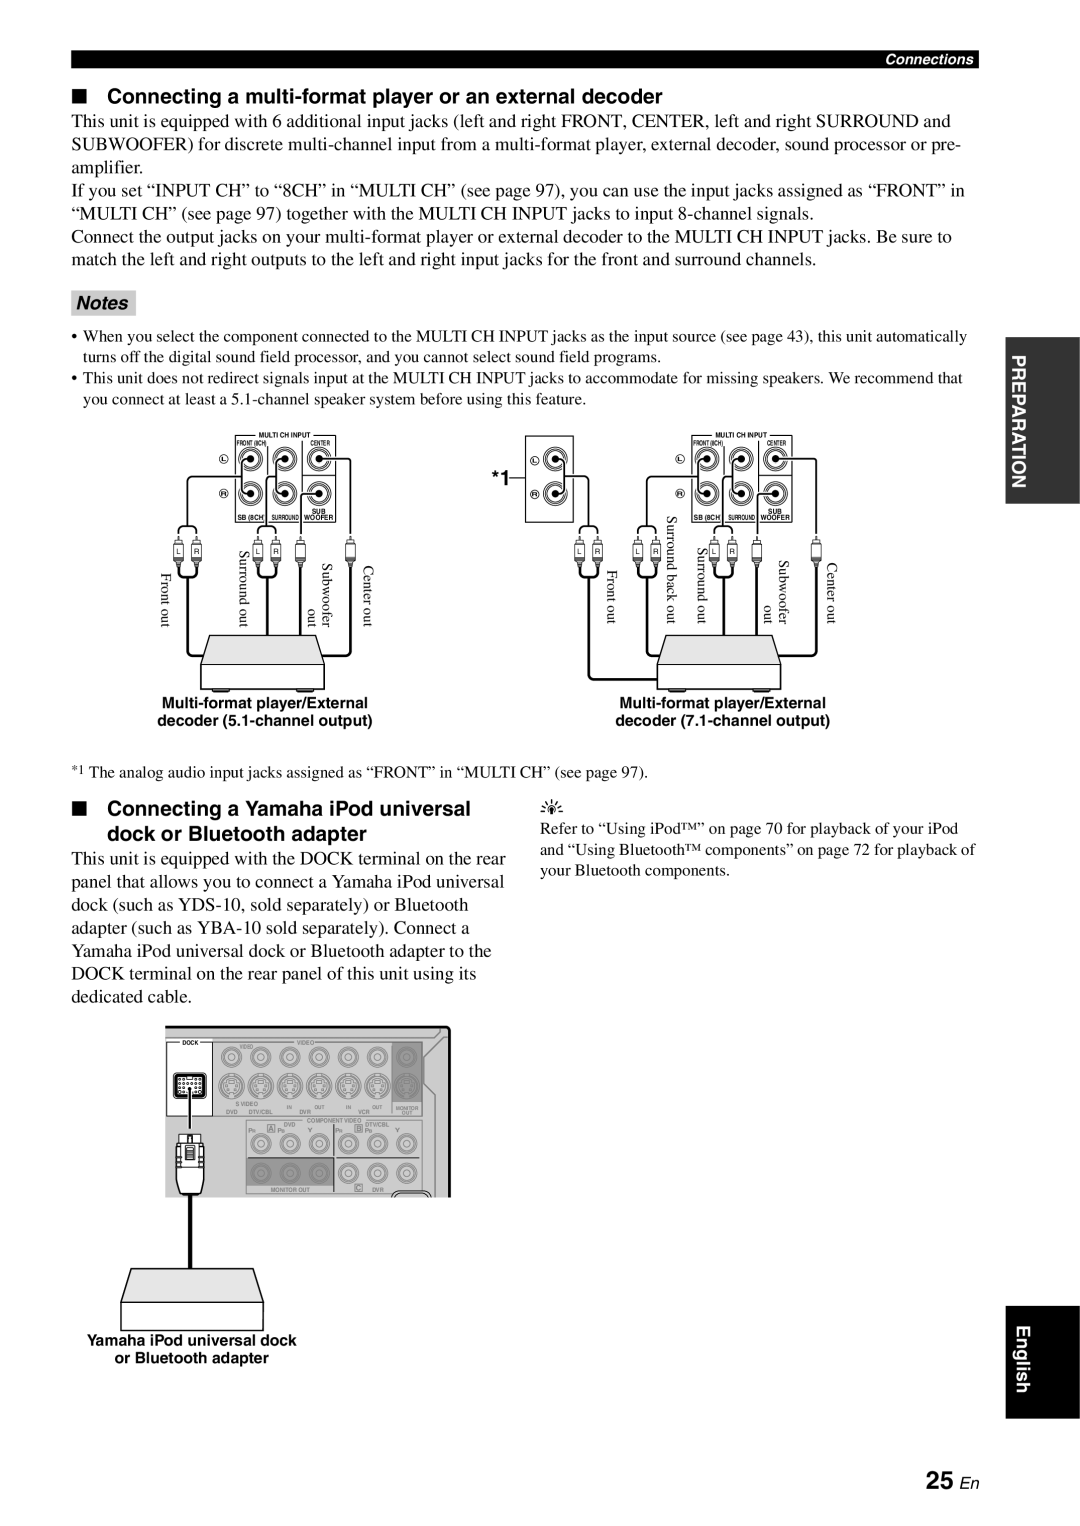 Yamaha RX-V863 owner manual 25 En, Connecting a Yamaha iPod universal, dock or Bluetooth adapter, Notes 